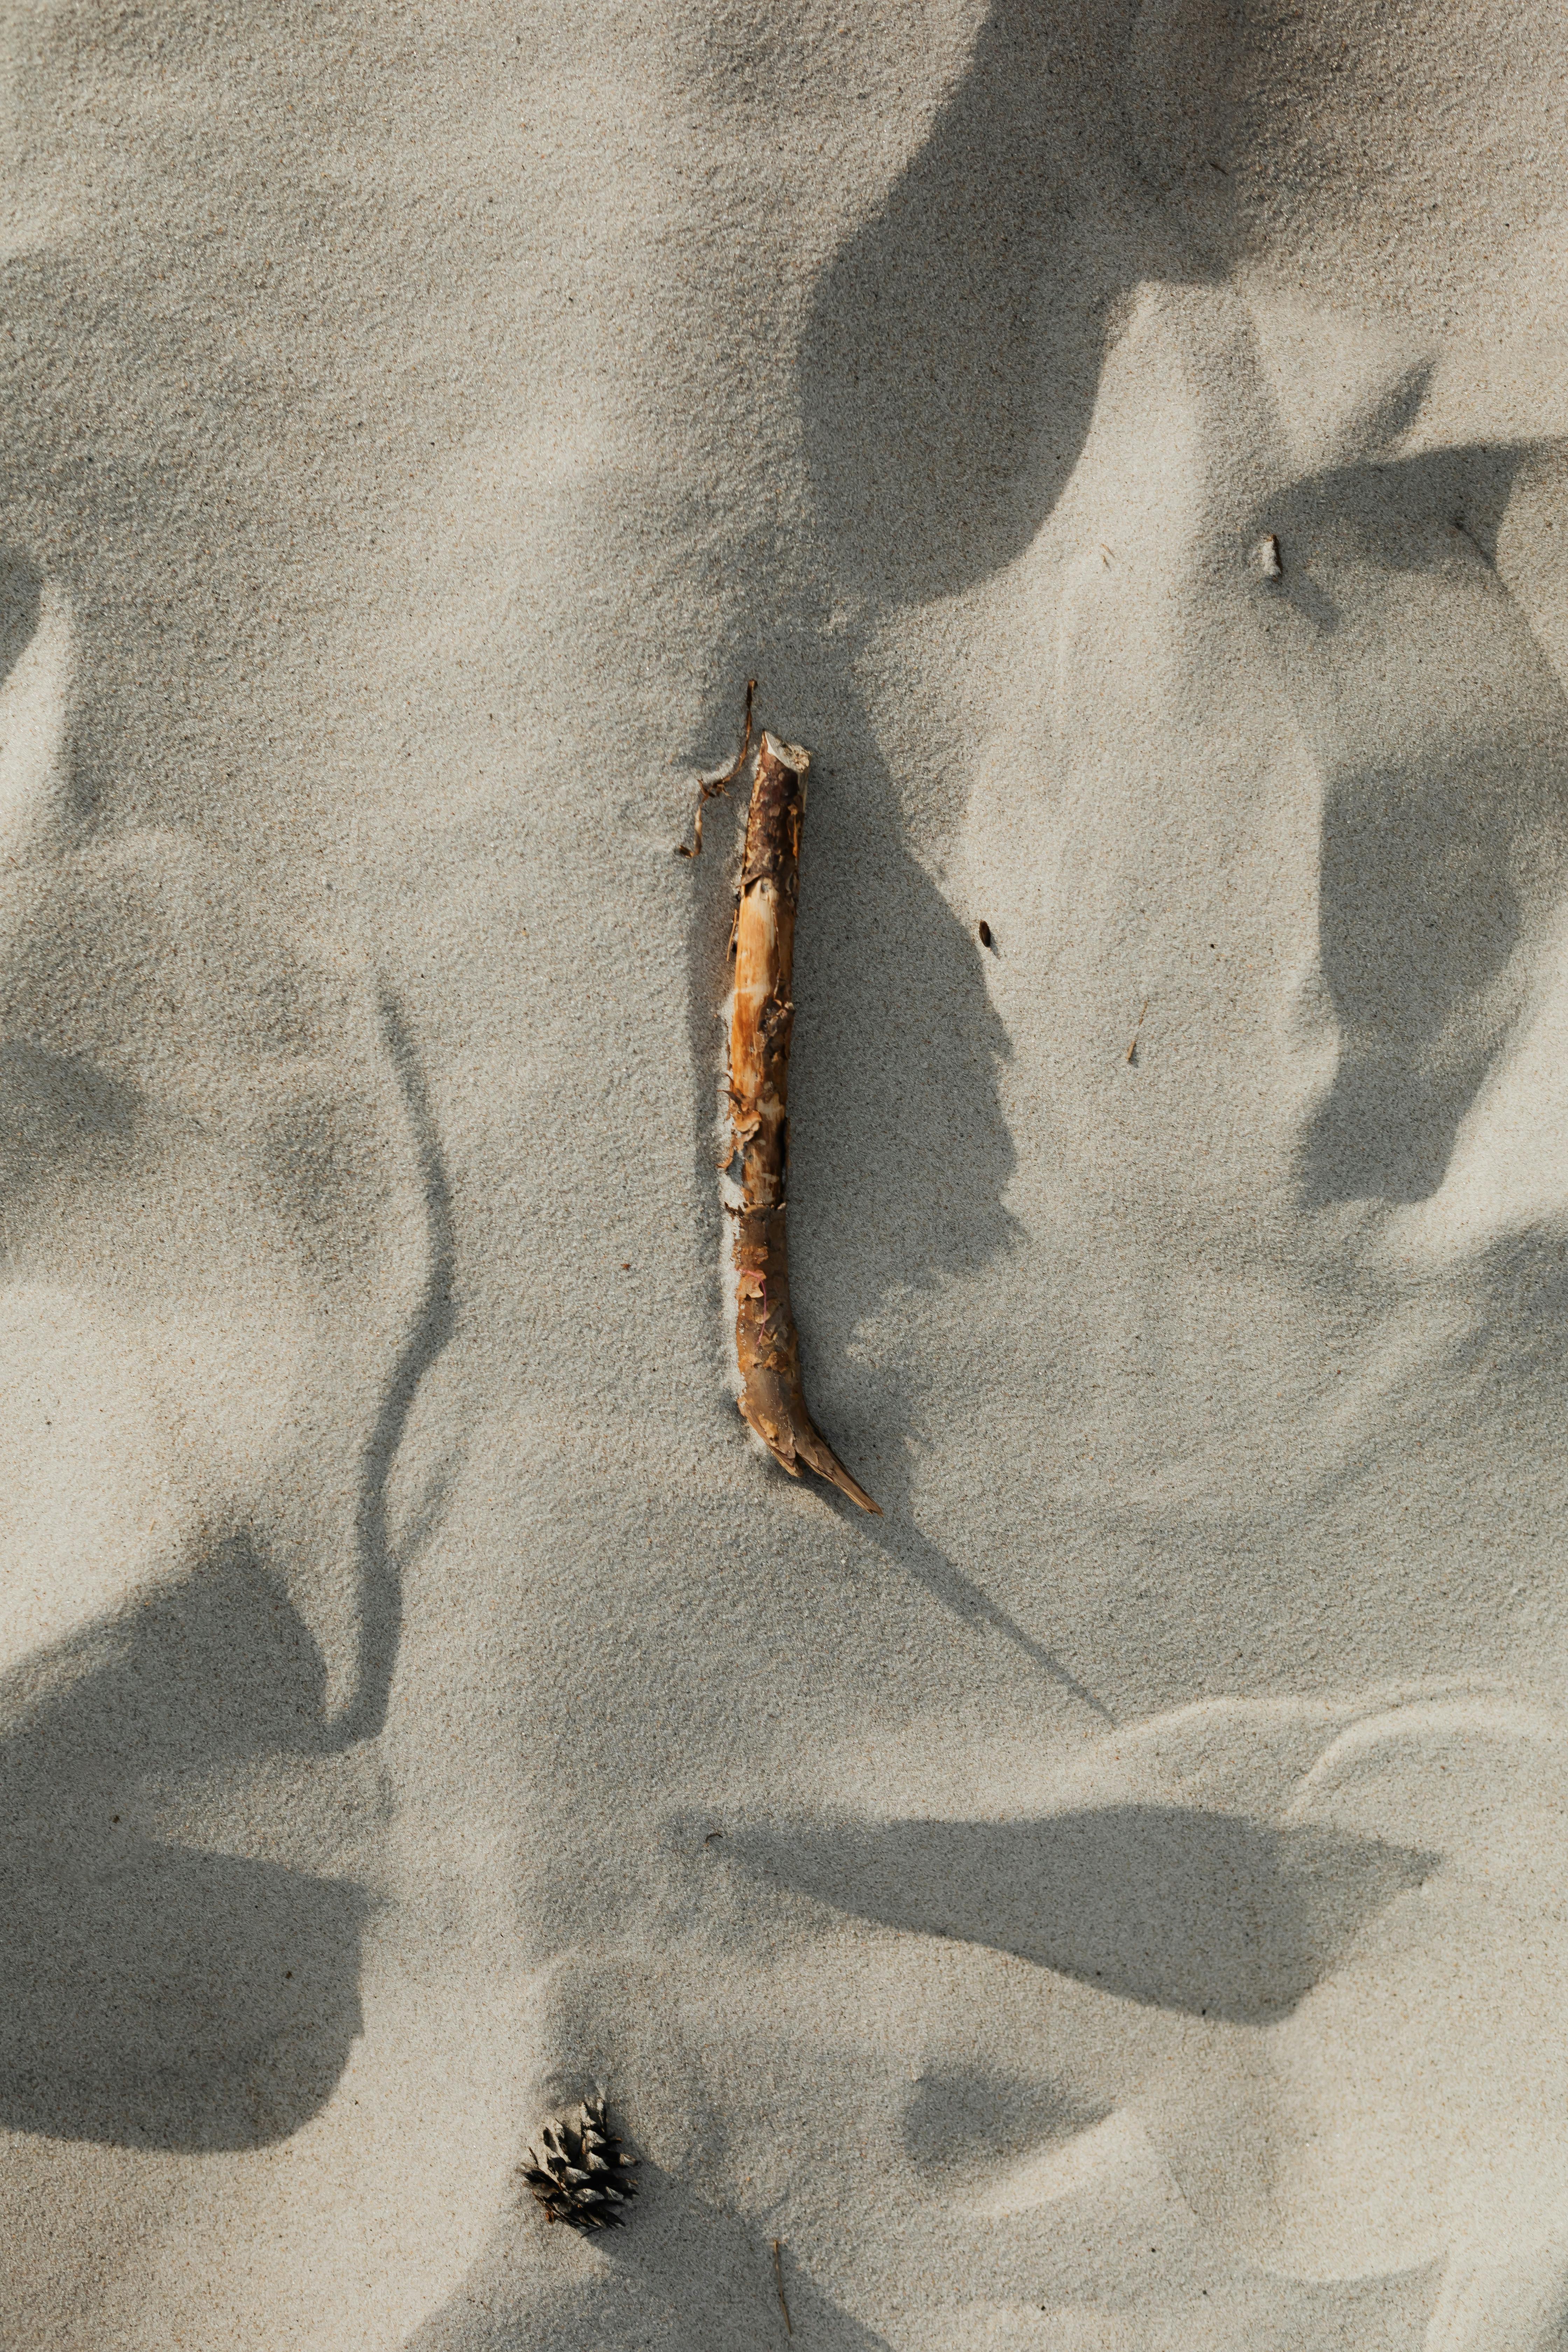 short brown stick on white sand